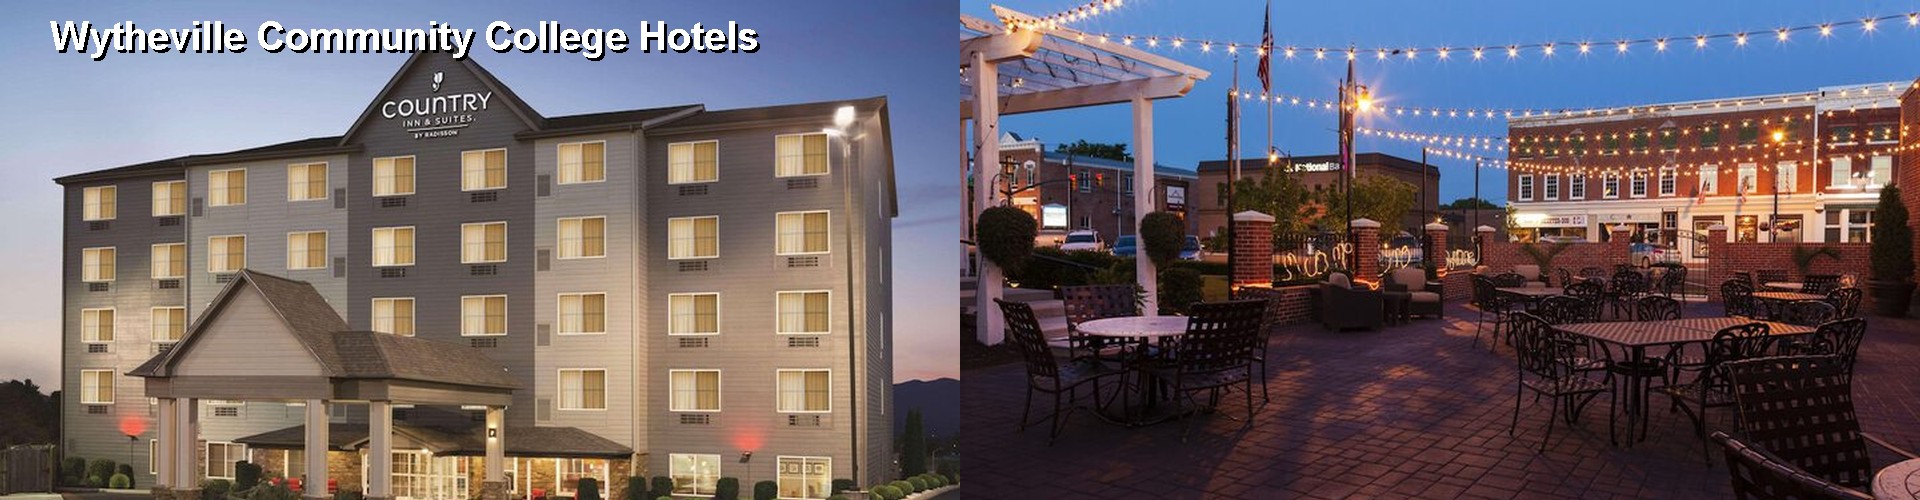 5 Best Hotels near Wytheville Community College